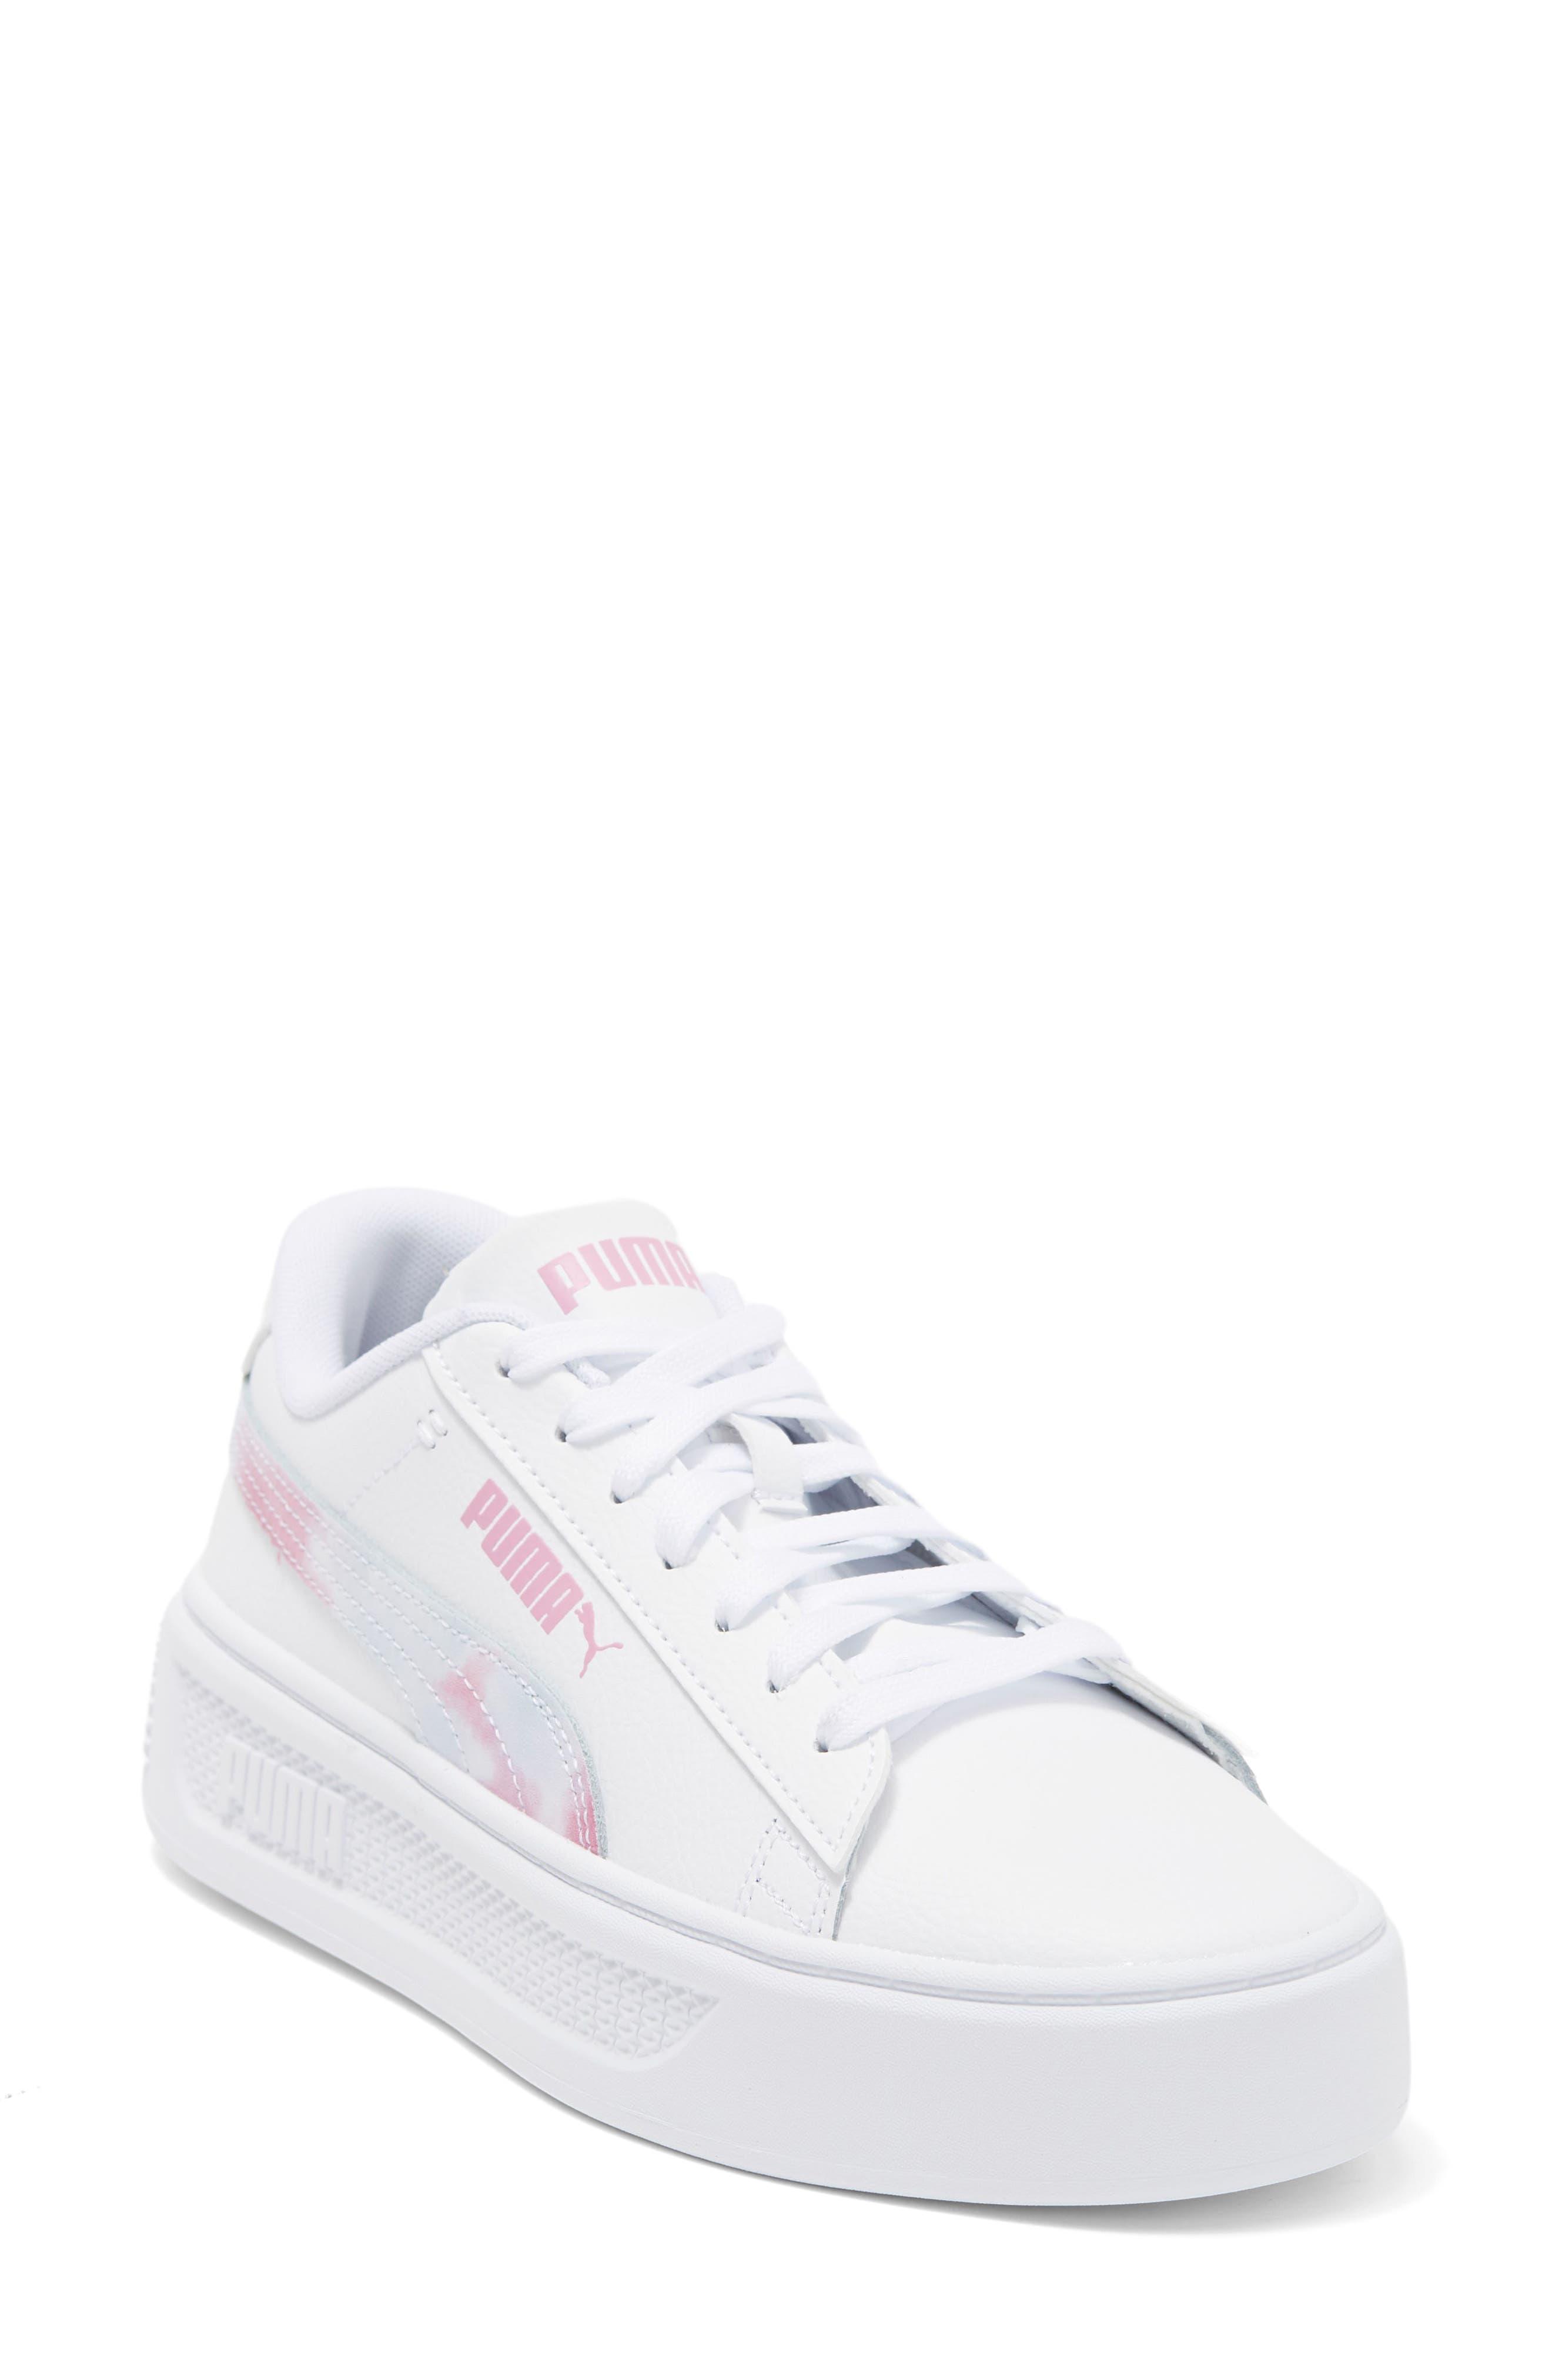 PUMA Smash Platform Sneaker in White | Lyst